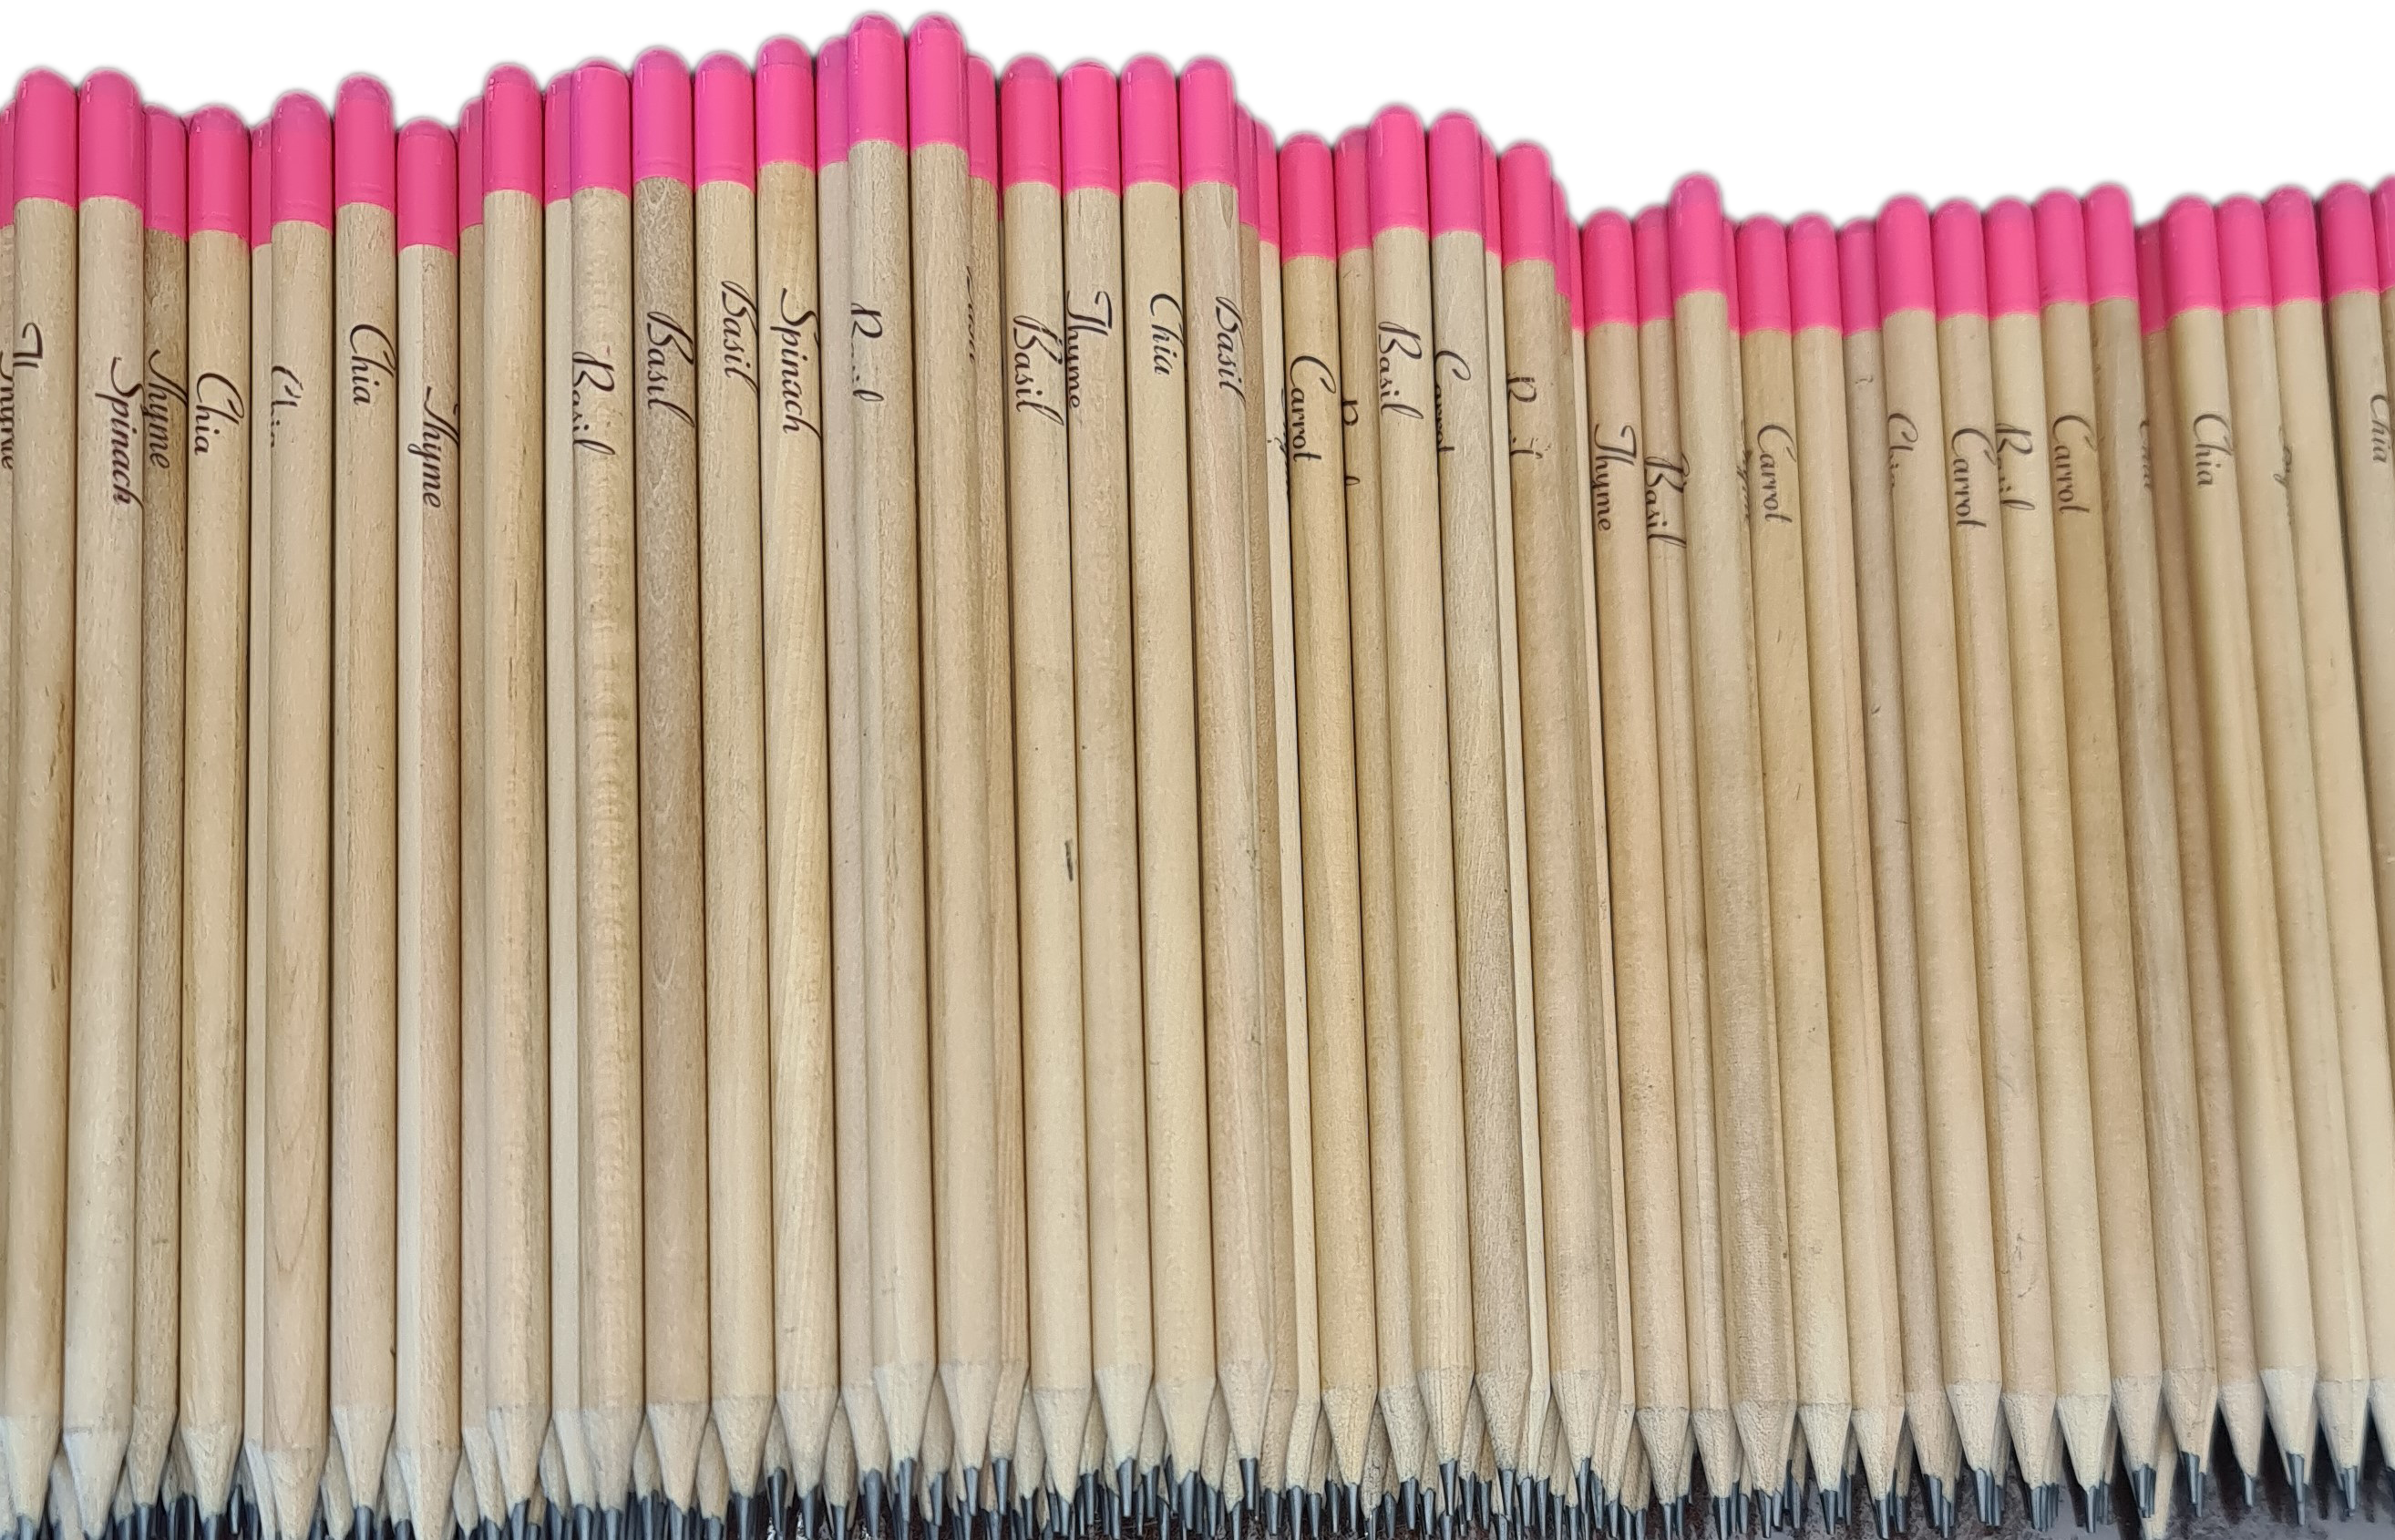 Pencils with seeds, AKA Seedpencils.  Pink tip